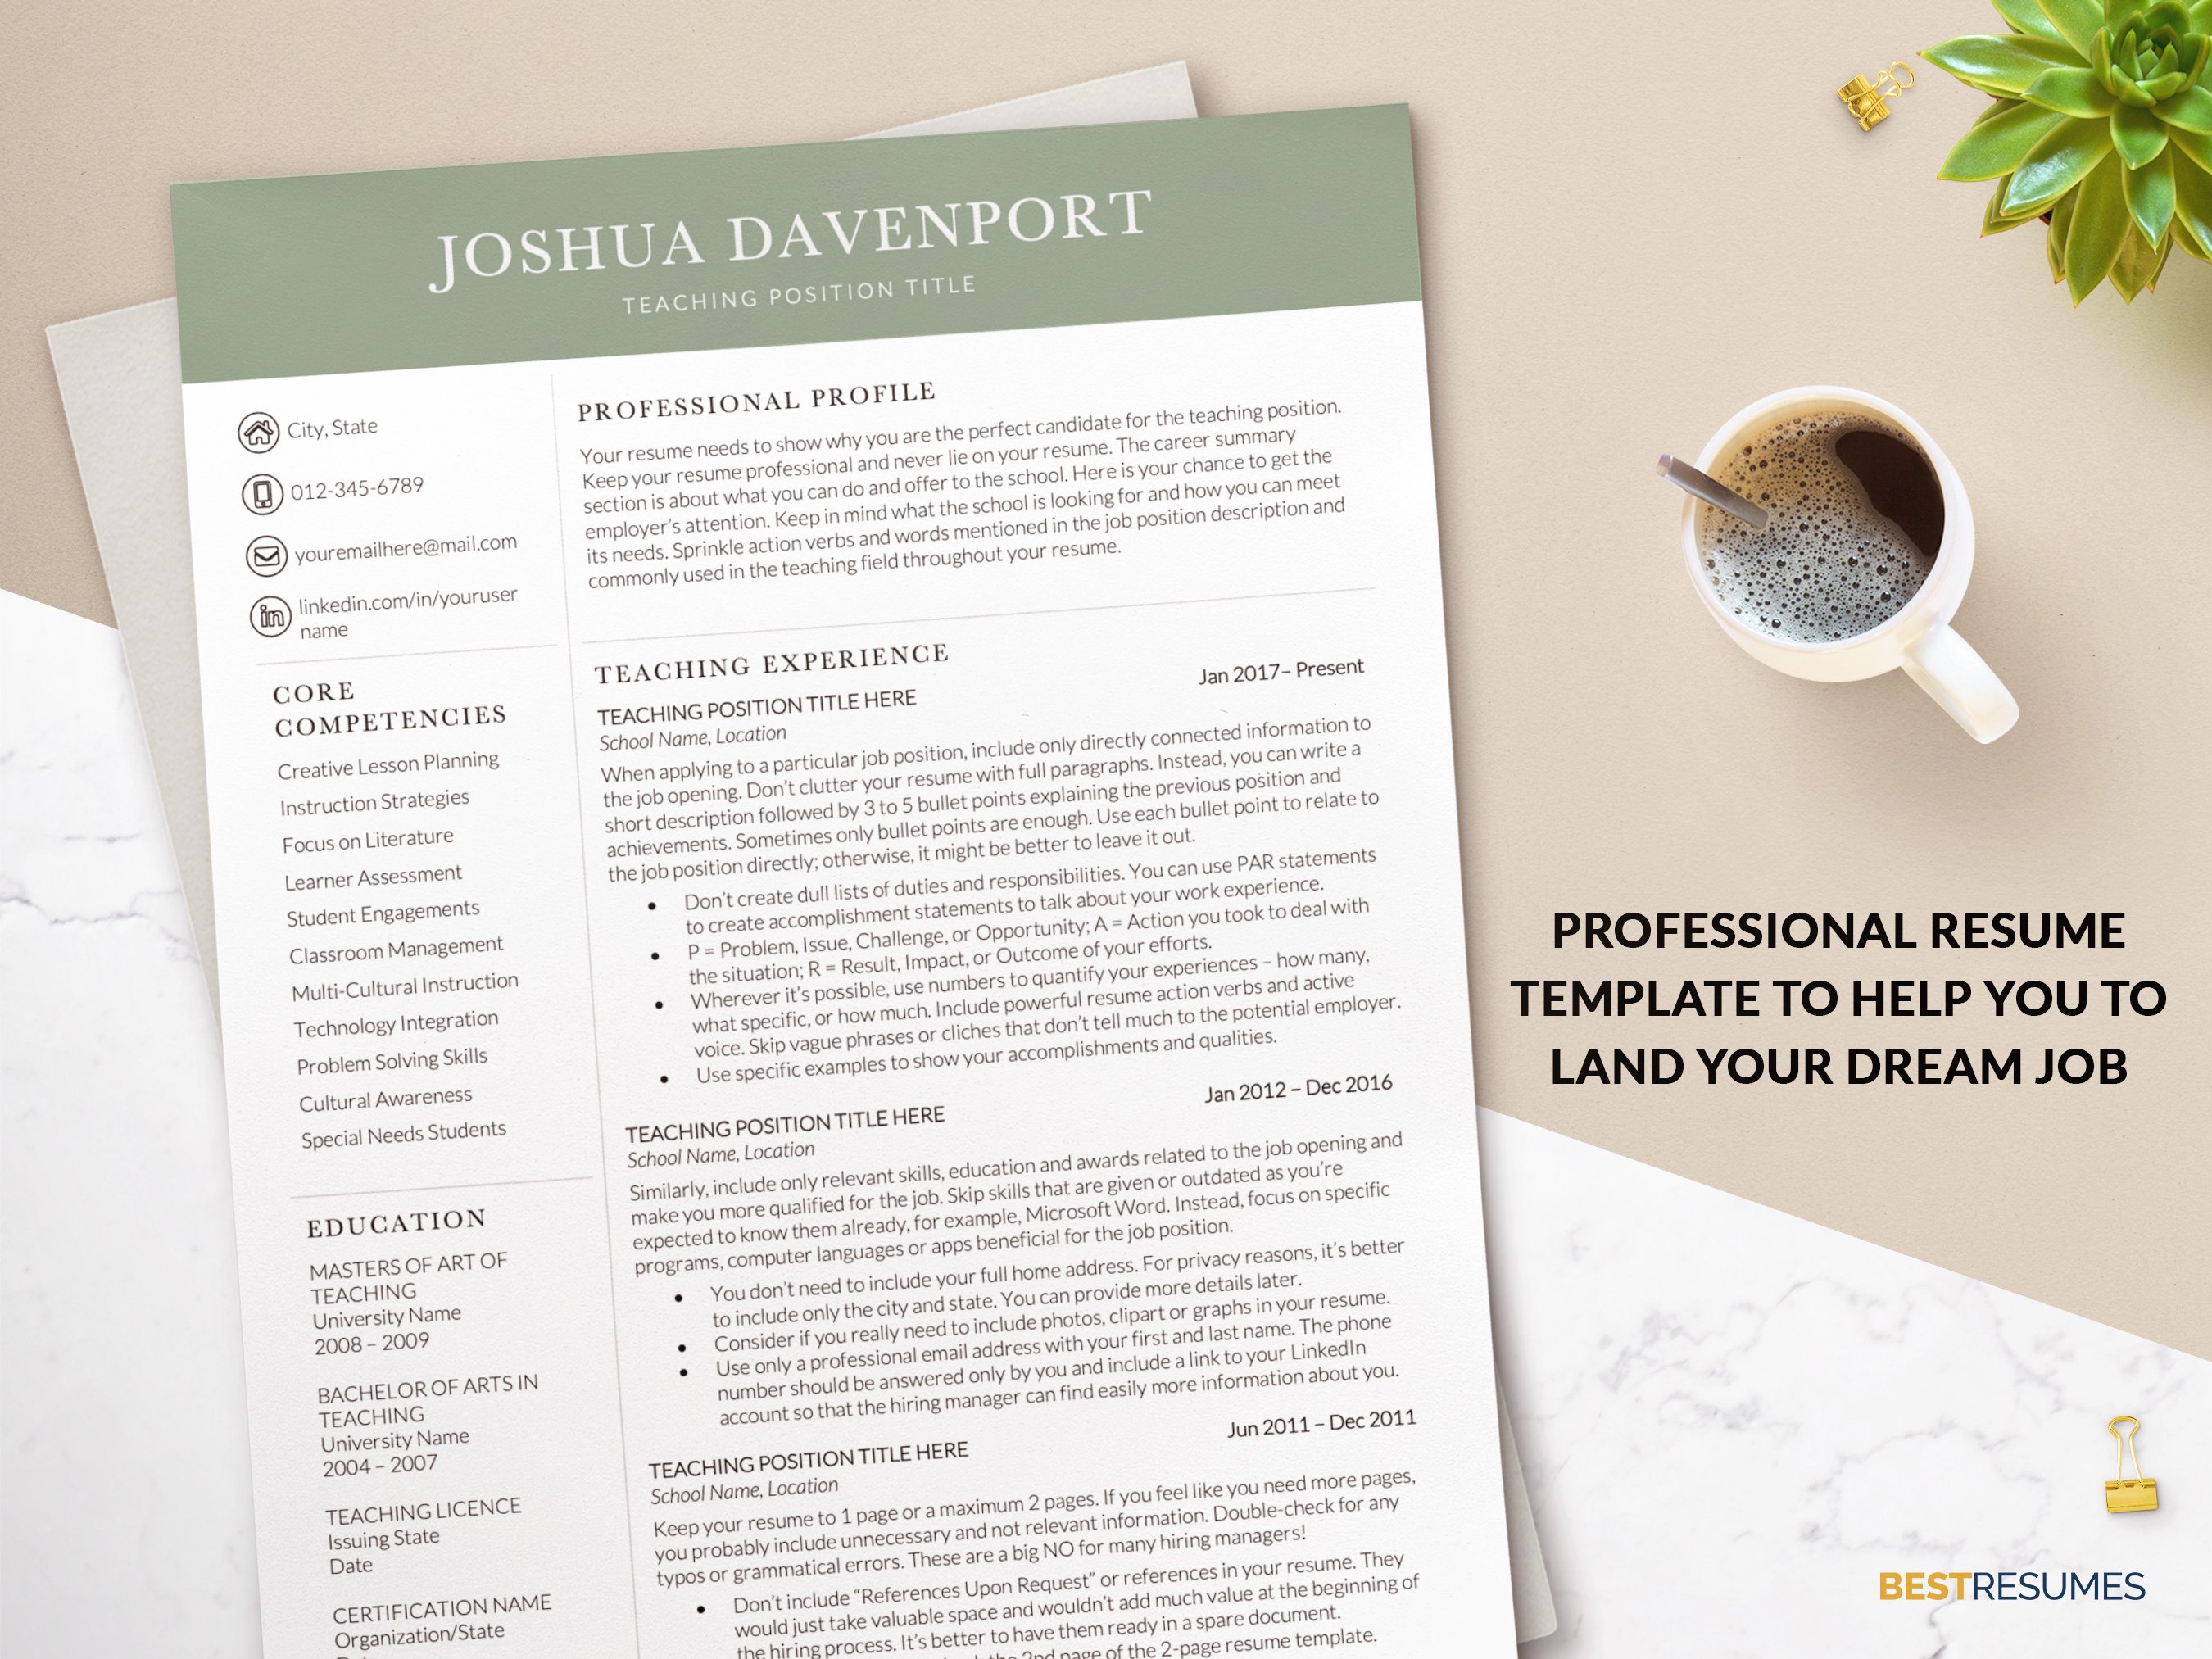 professional resume for teachers template modern resume joshua davenport 961